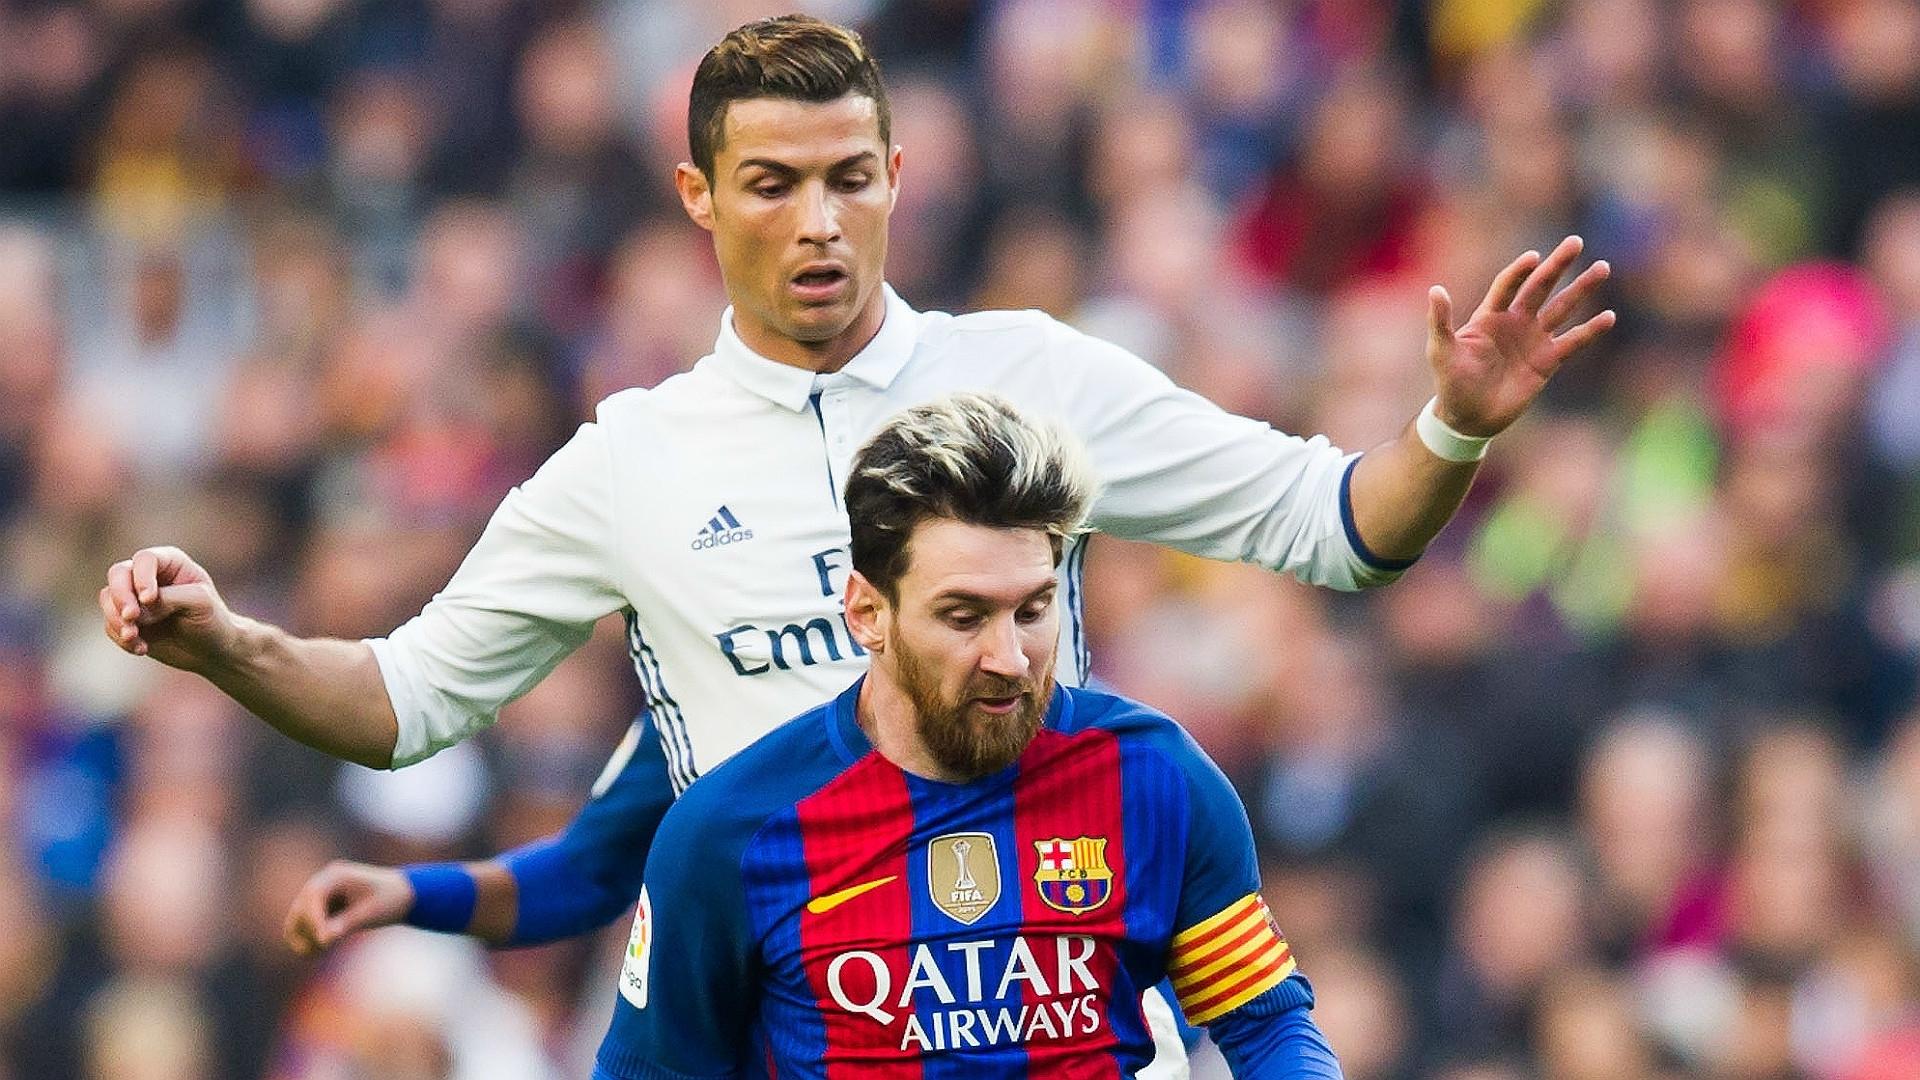 Ronaldo and Messi Cool Wallpapers on WallpaperDog